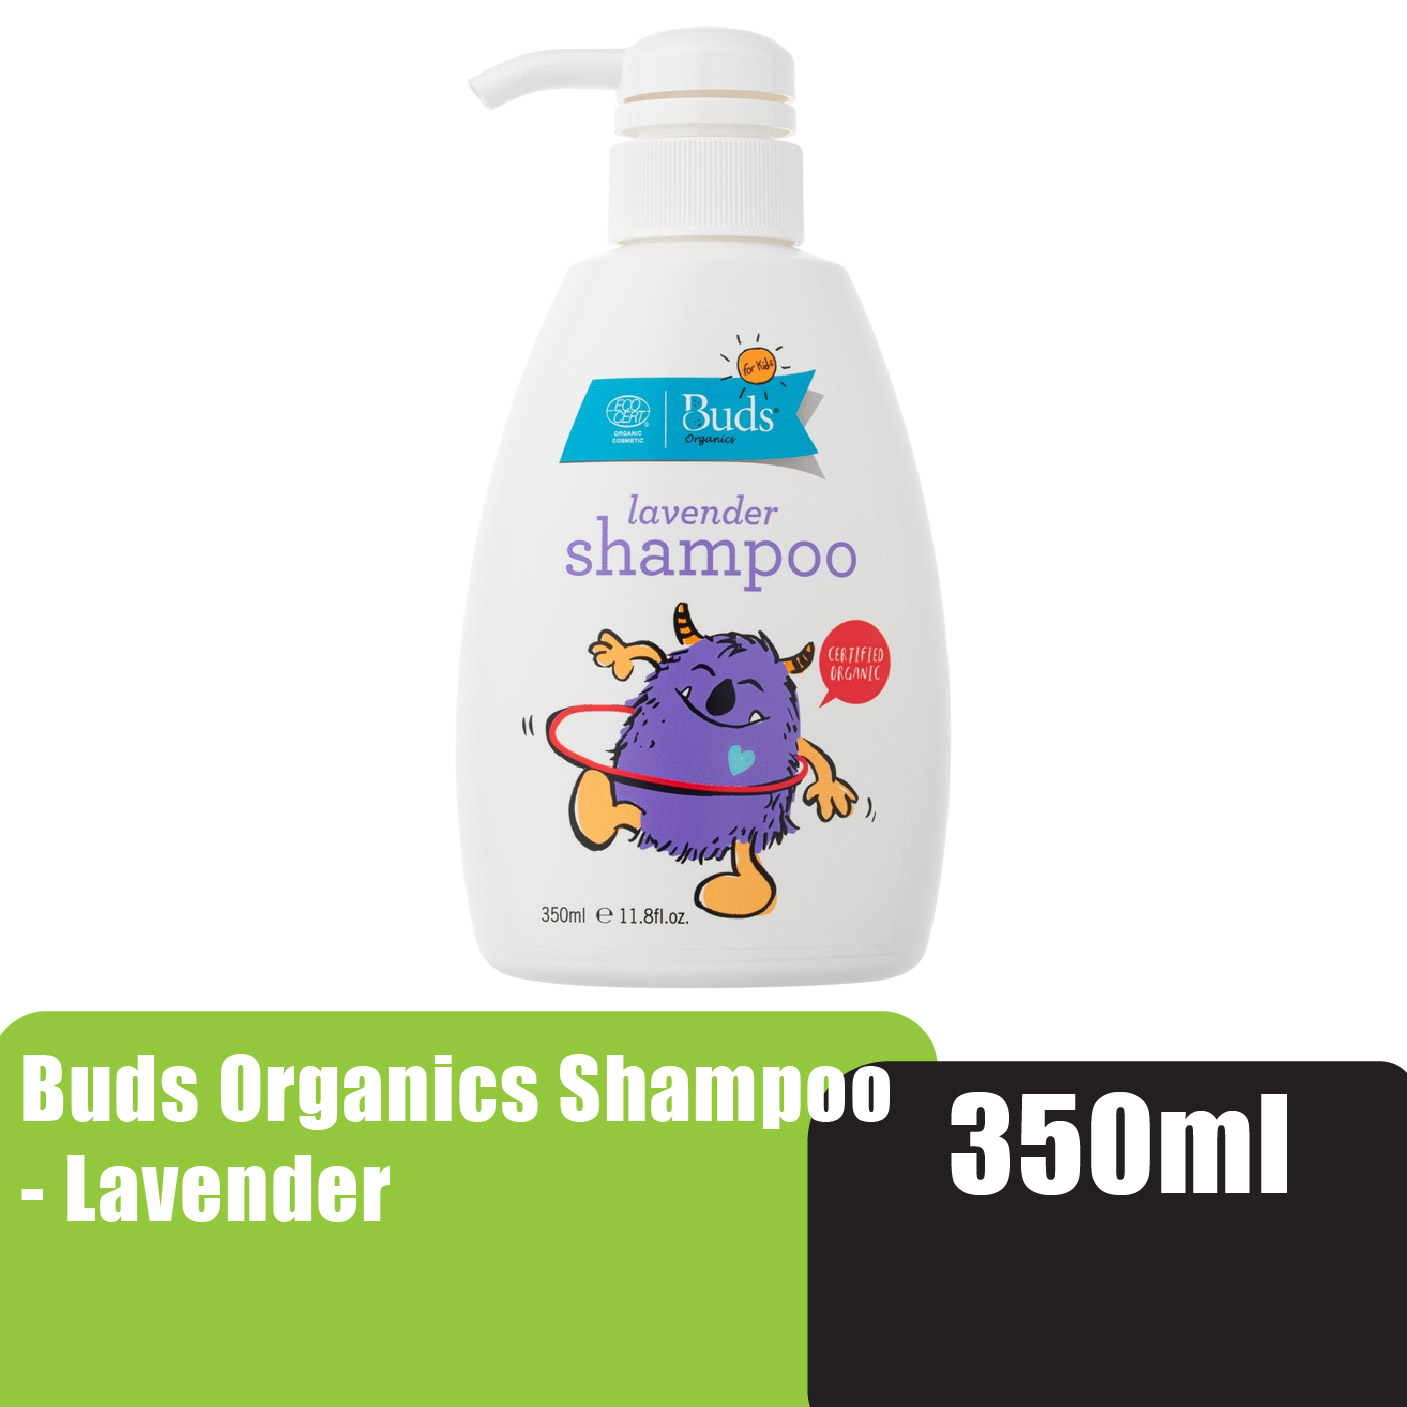 Buds Organics Plant based Lavender Shampoo 350ml with aloe vera - Help moisturize kids scalp